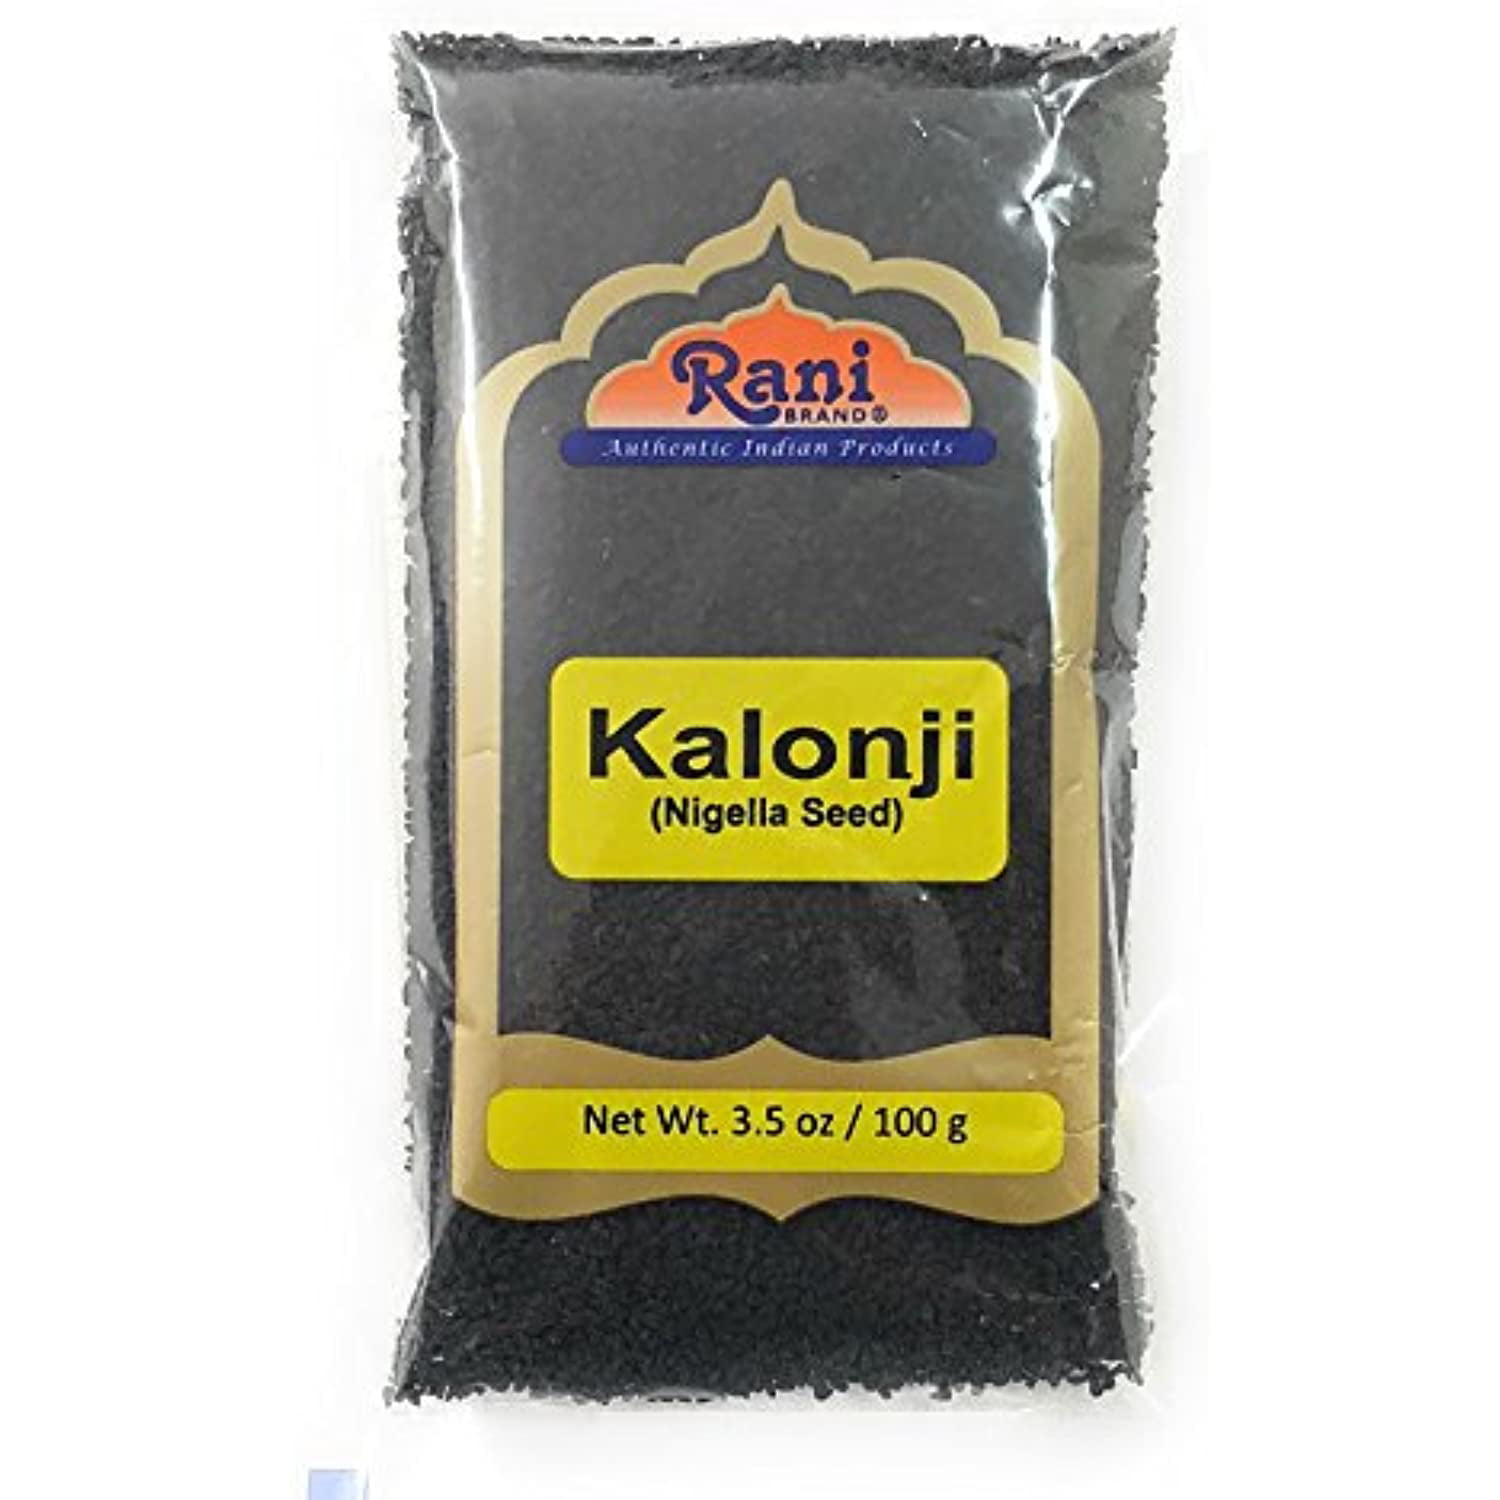 Rani Kalonji (Black Seed, Nigella Sativa, Black Cumin) Seeds 3.5oz ...